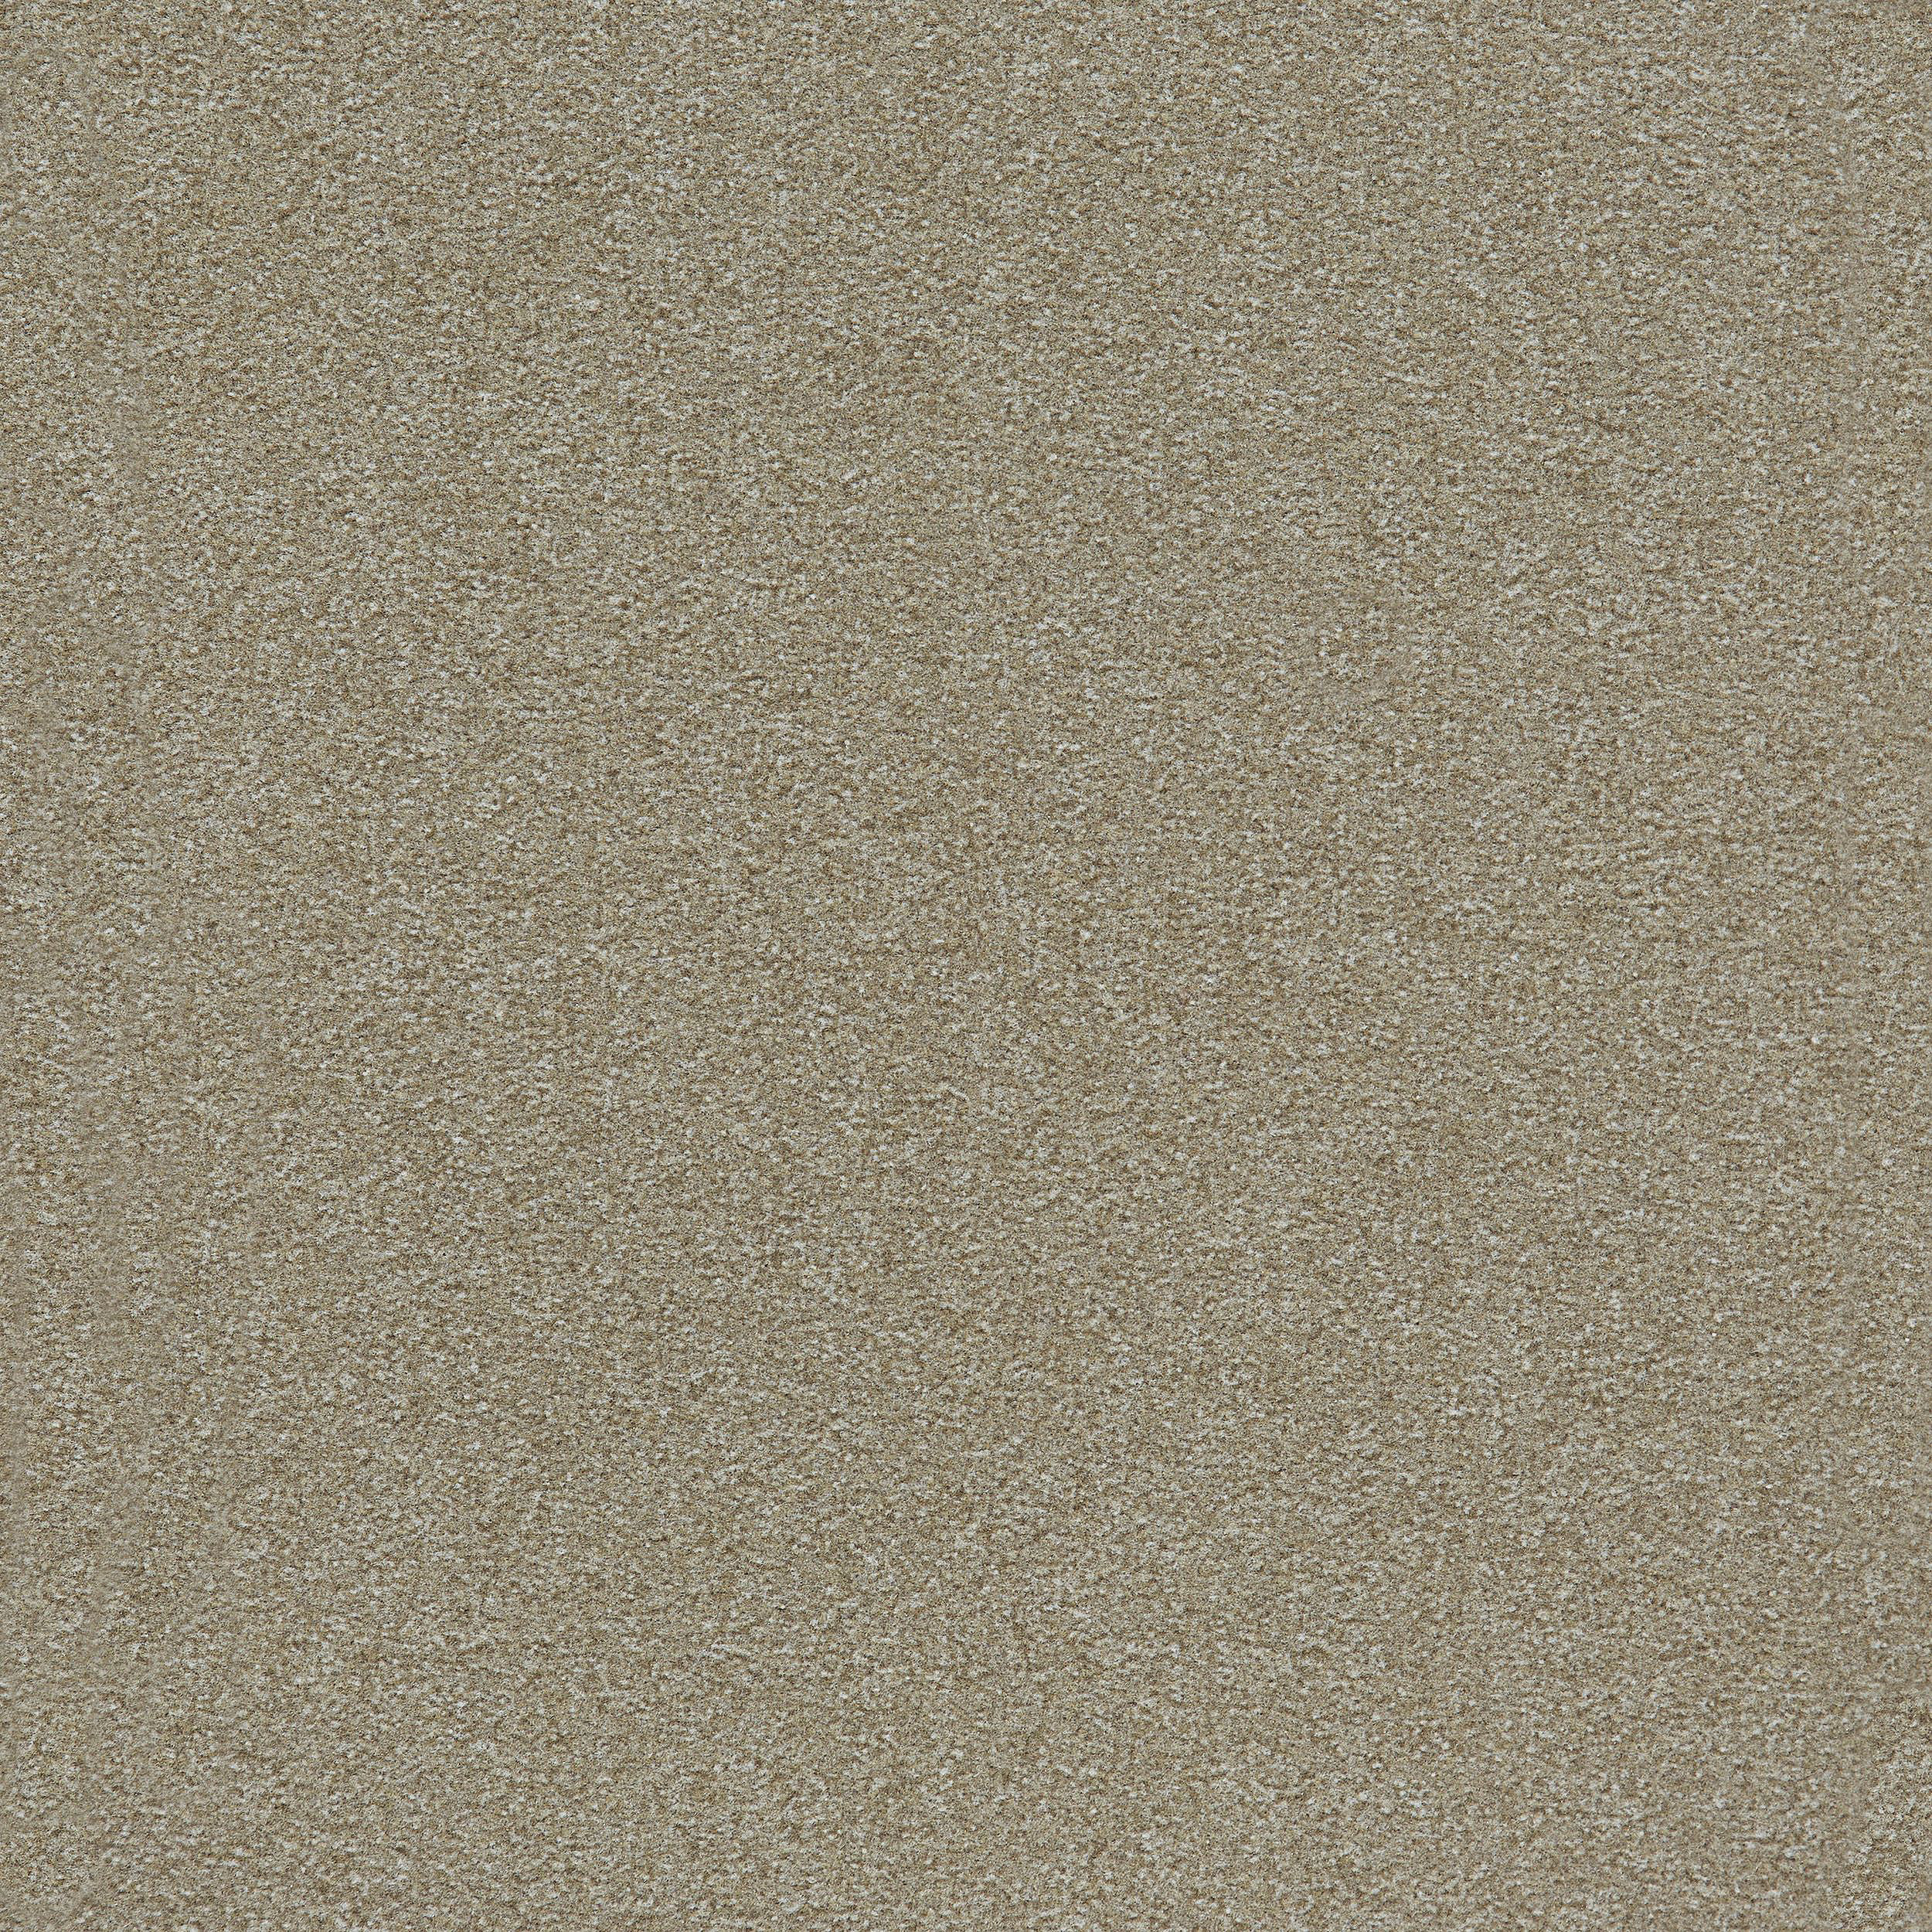 Heuga 725 Carpet Tile In Oyster afbeeldingnummer 12